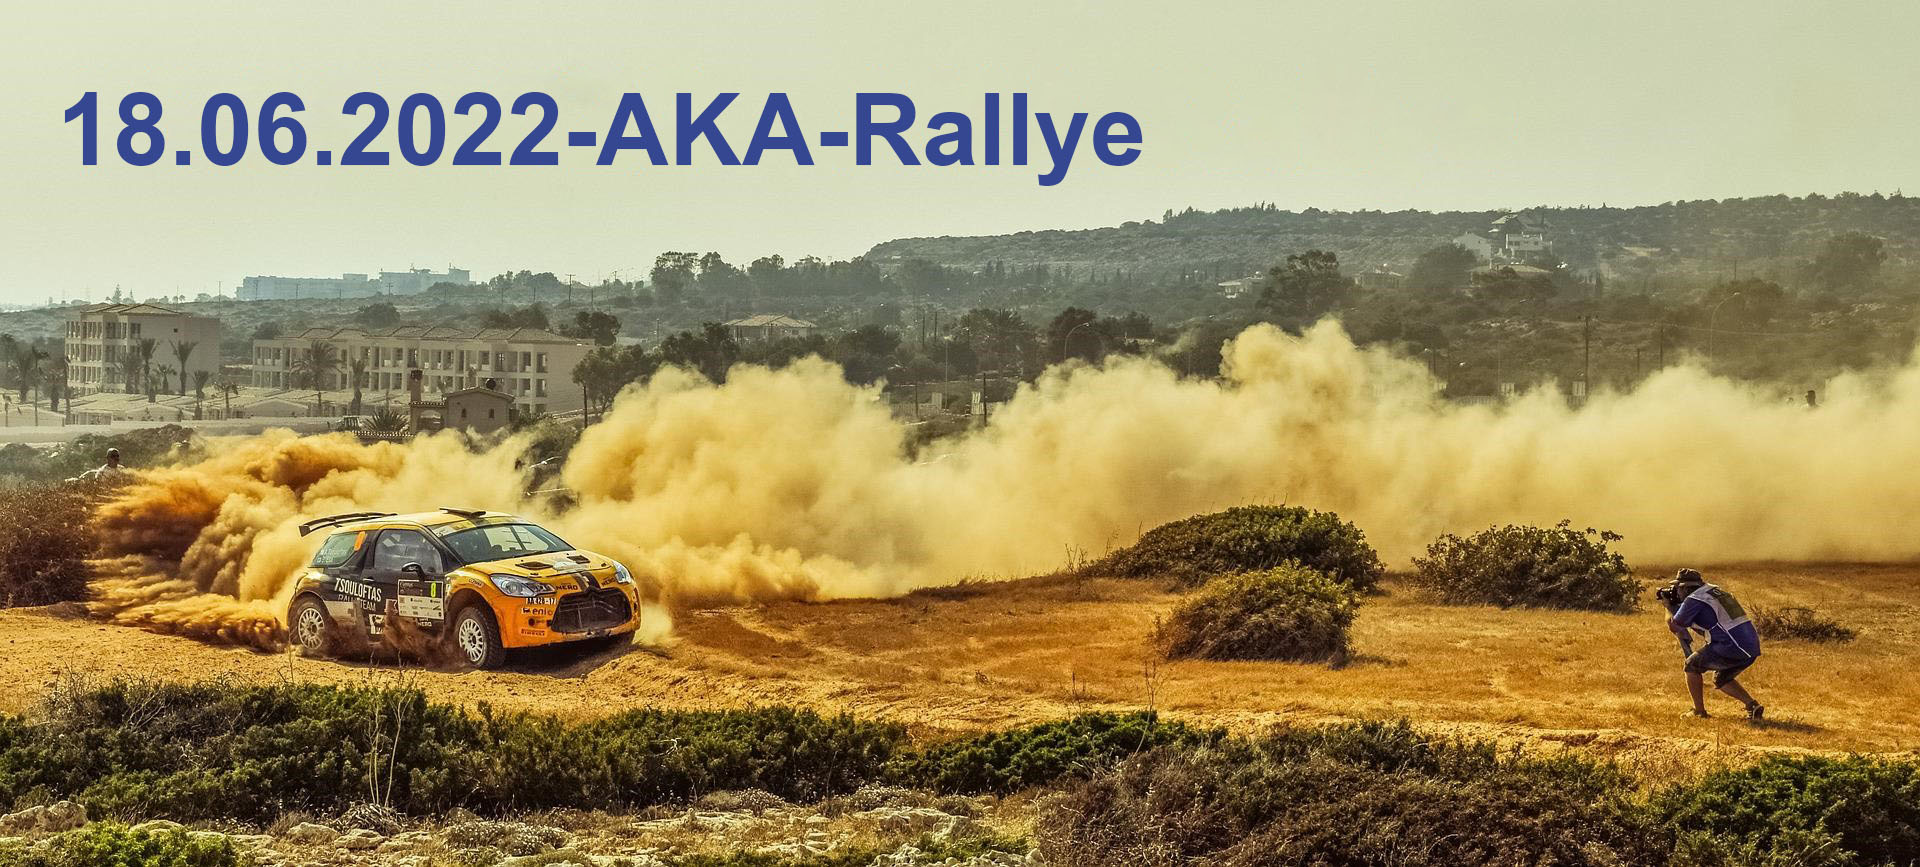 18.06.2022 - AKA-Rallye